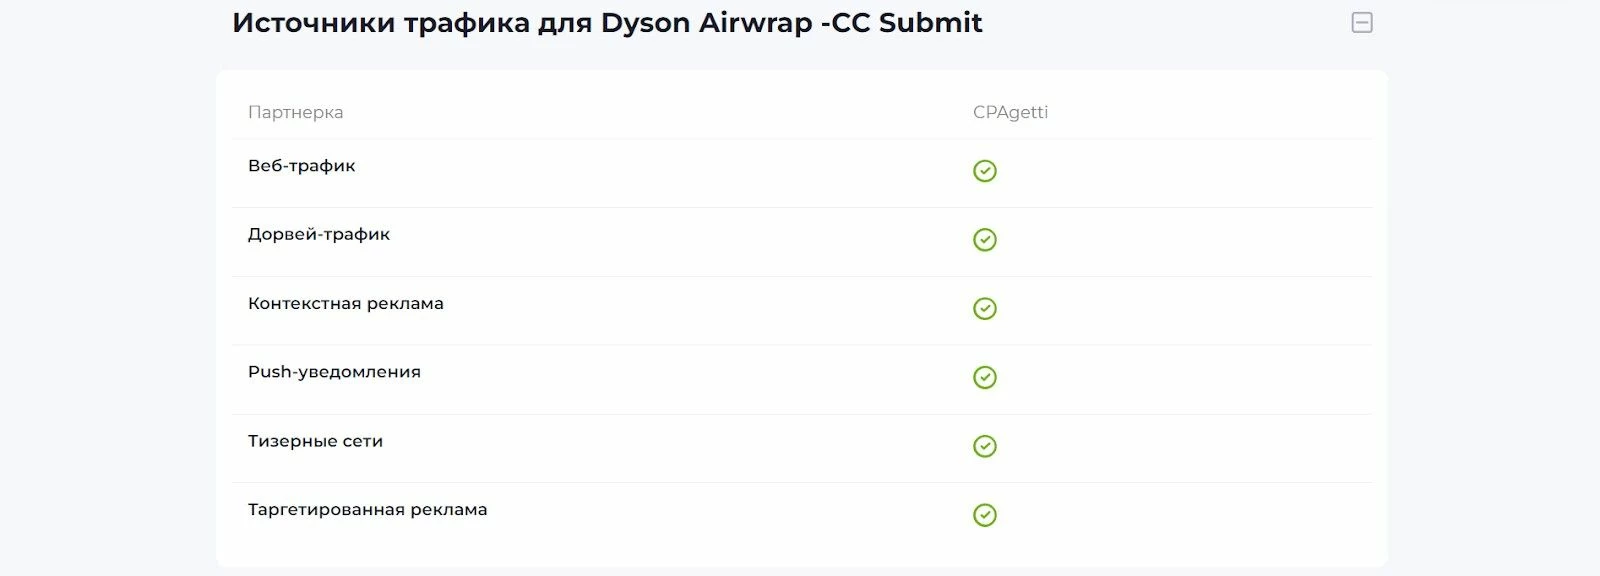 Источники трафика для Dyson Airwrap